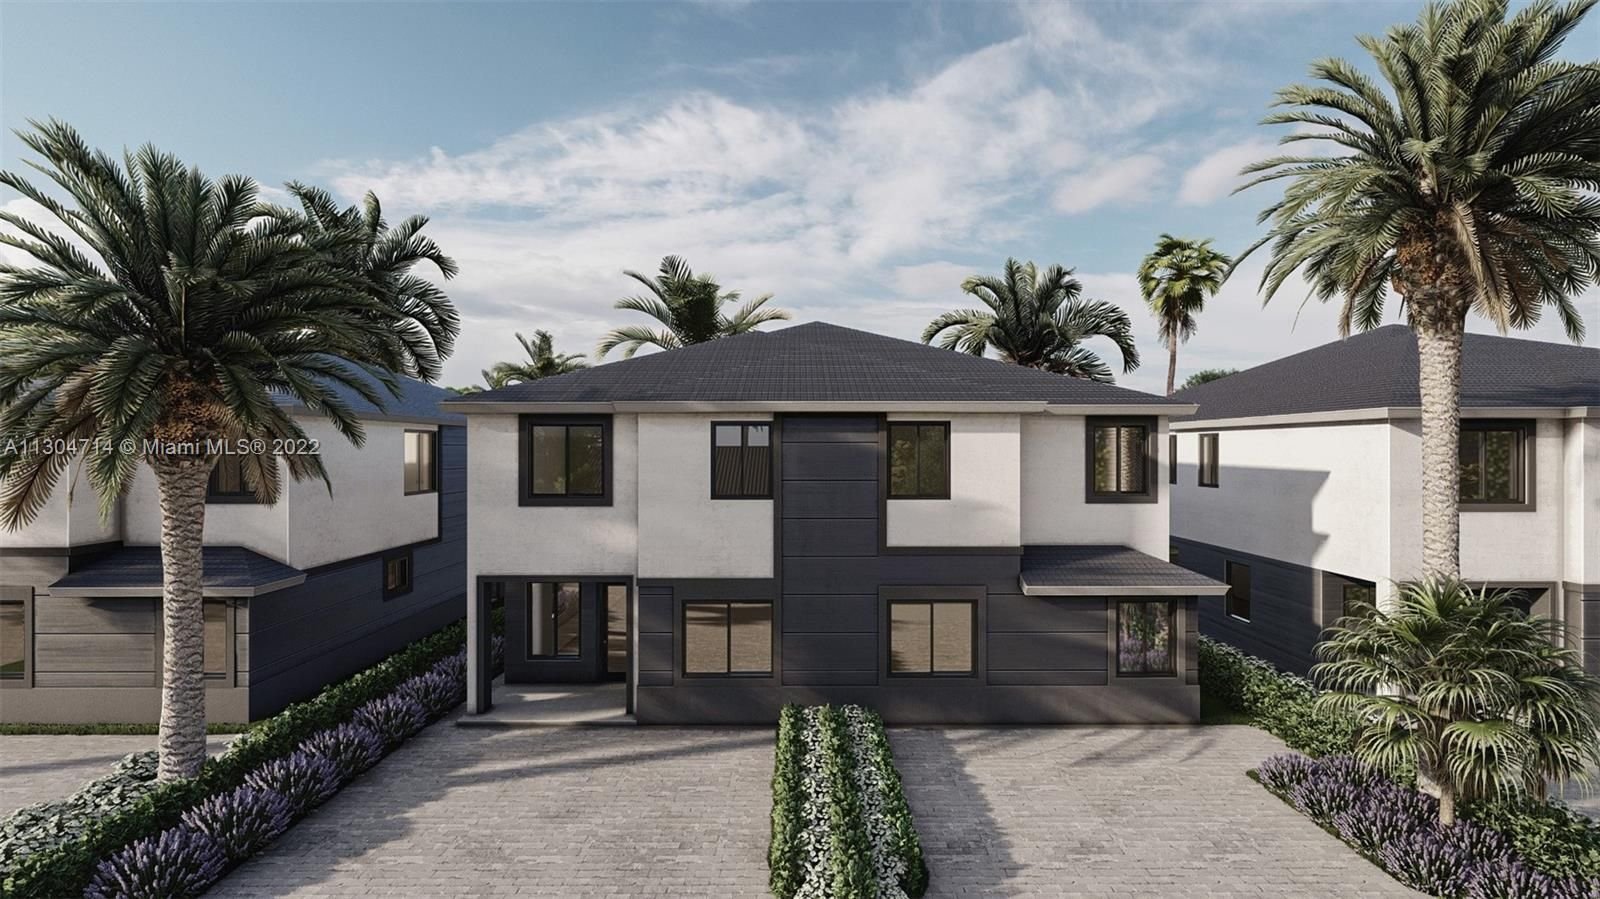 Real estate property located at 22414 125 Ave A, Miami-Dade County, Miami, FL